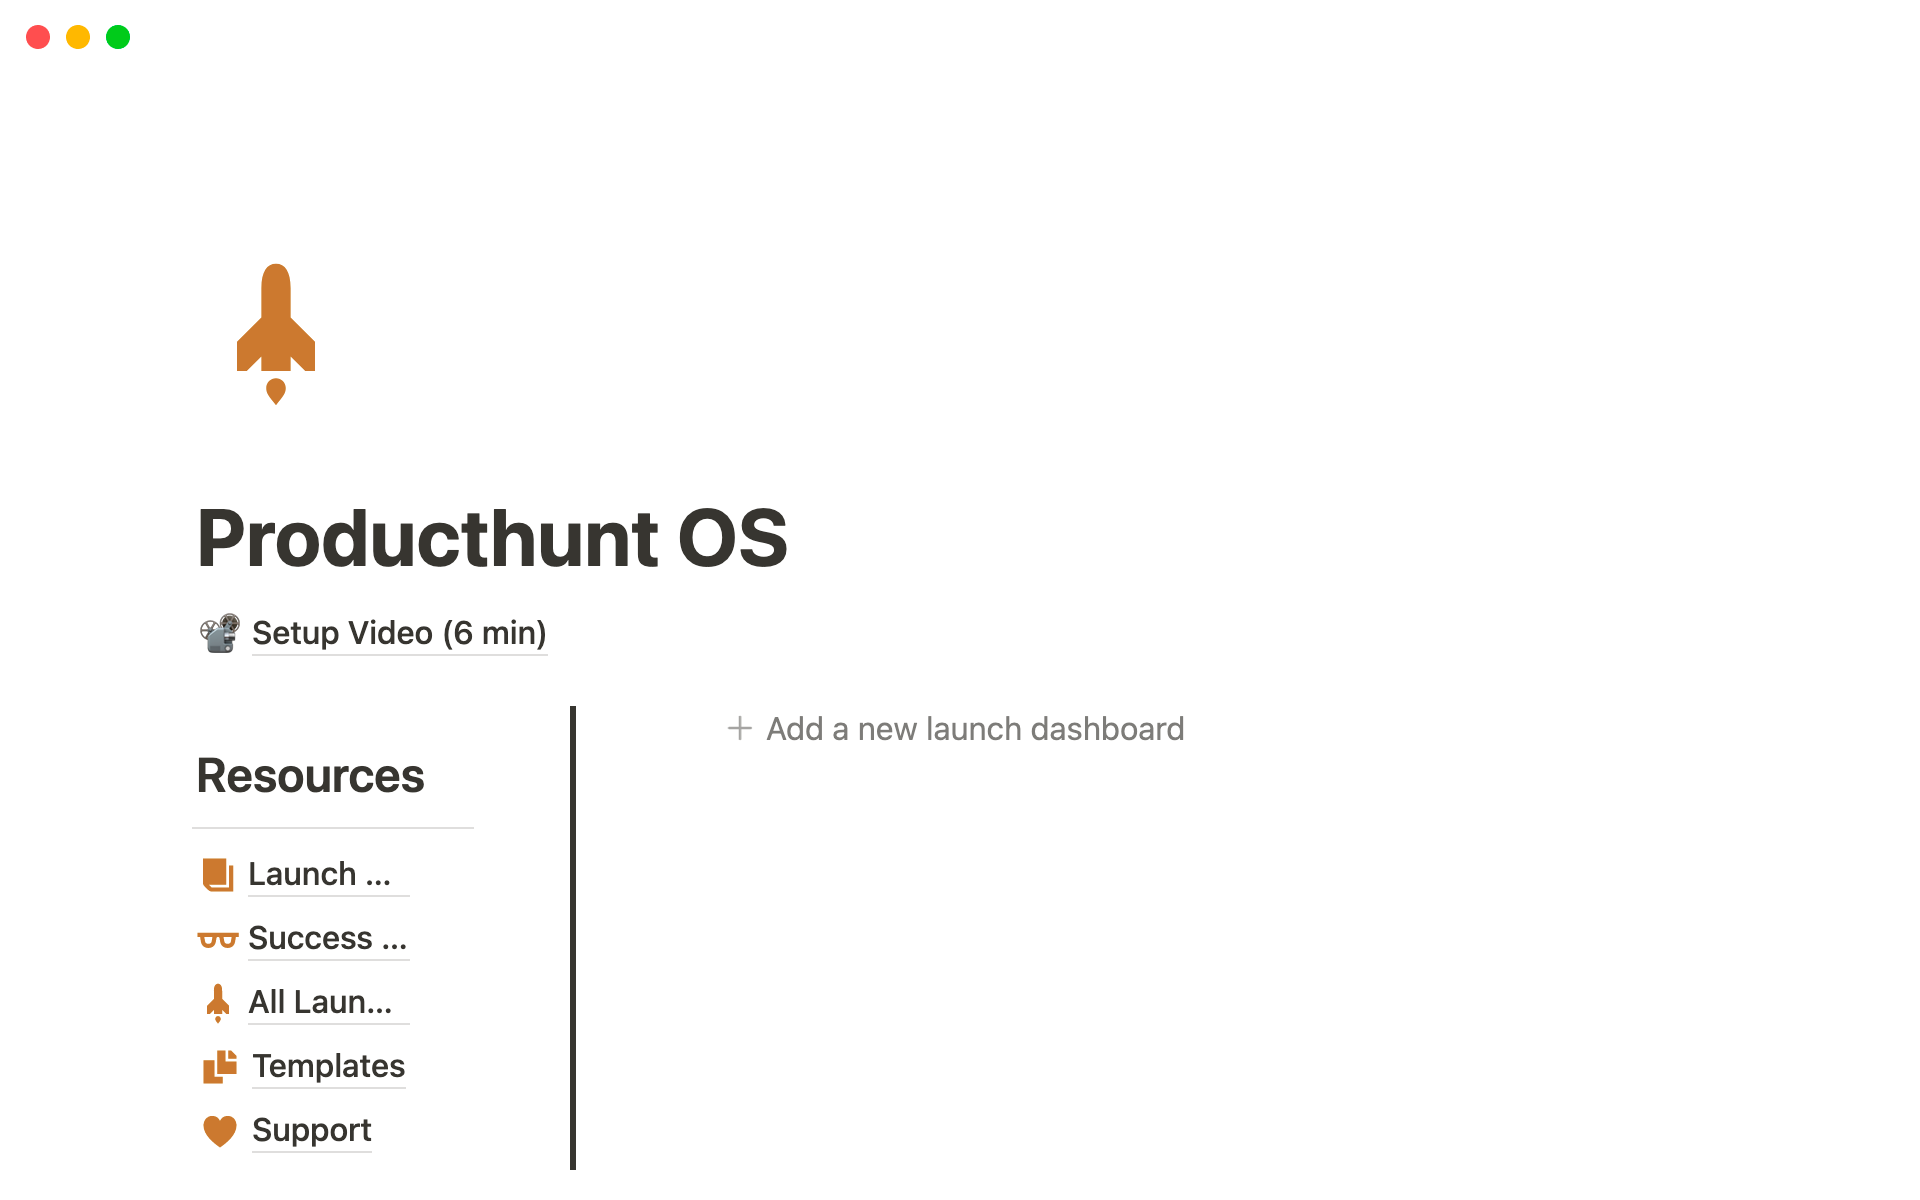 Vista previa de plantilla para Producthunt OS